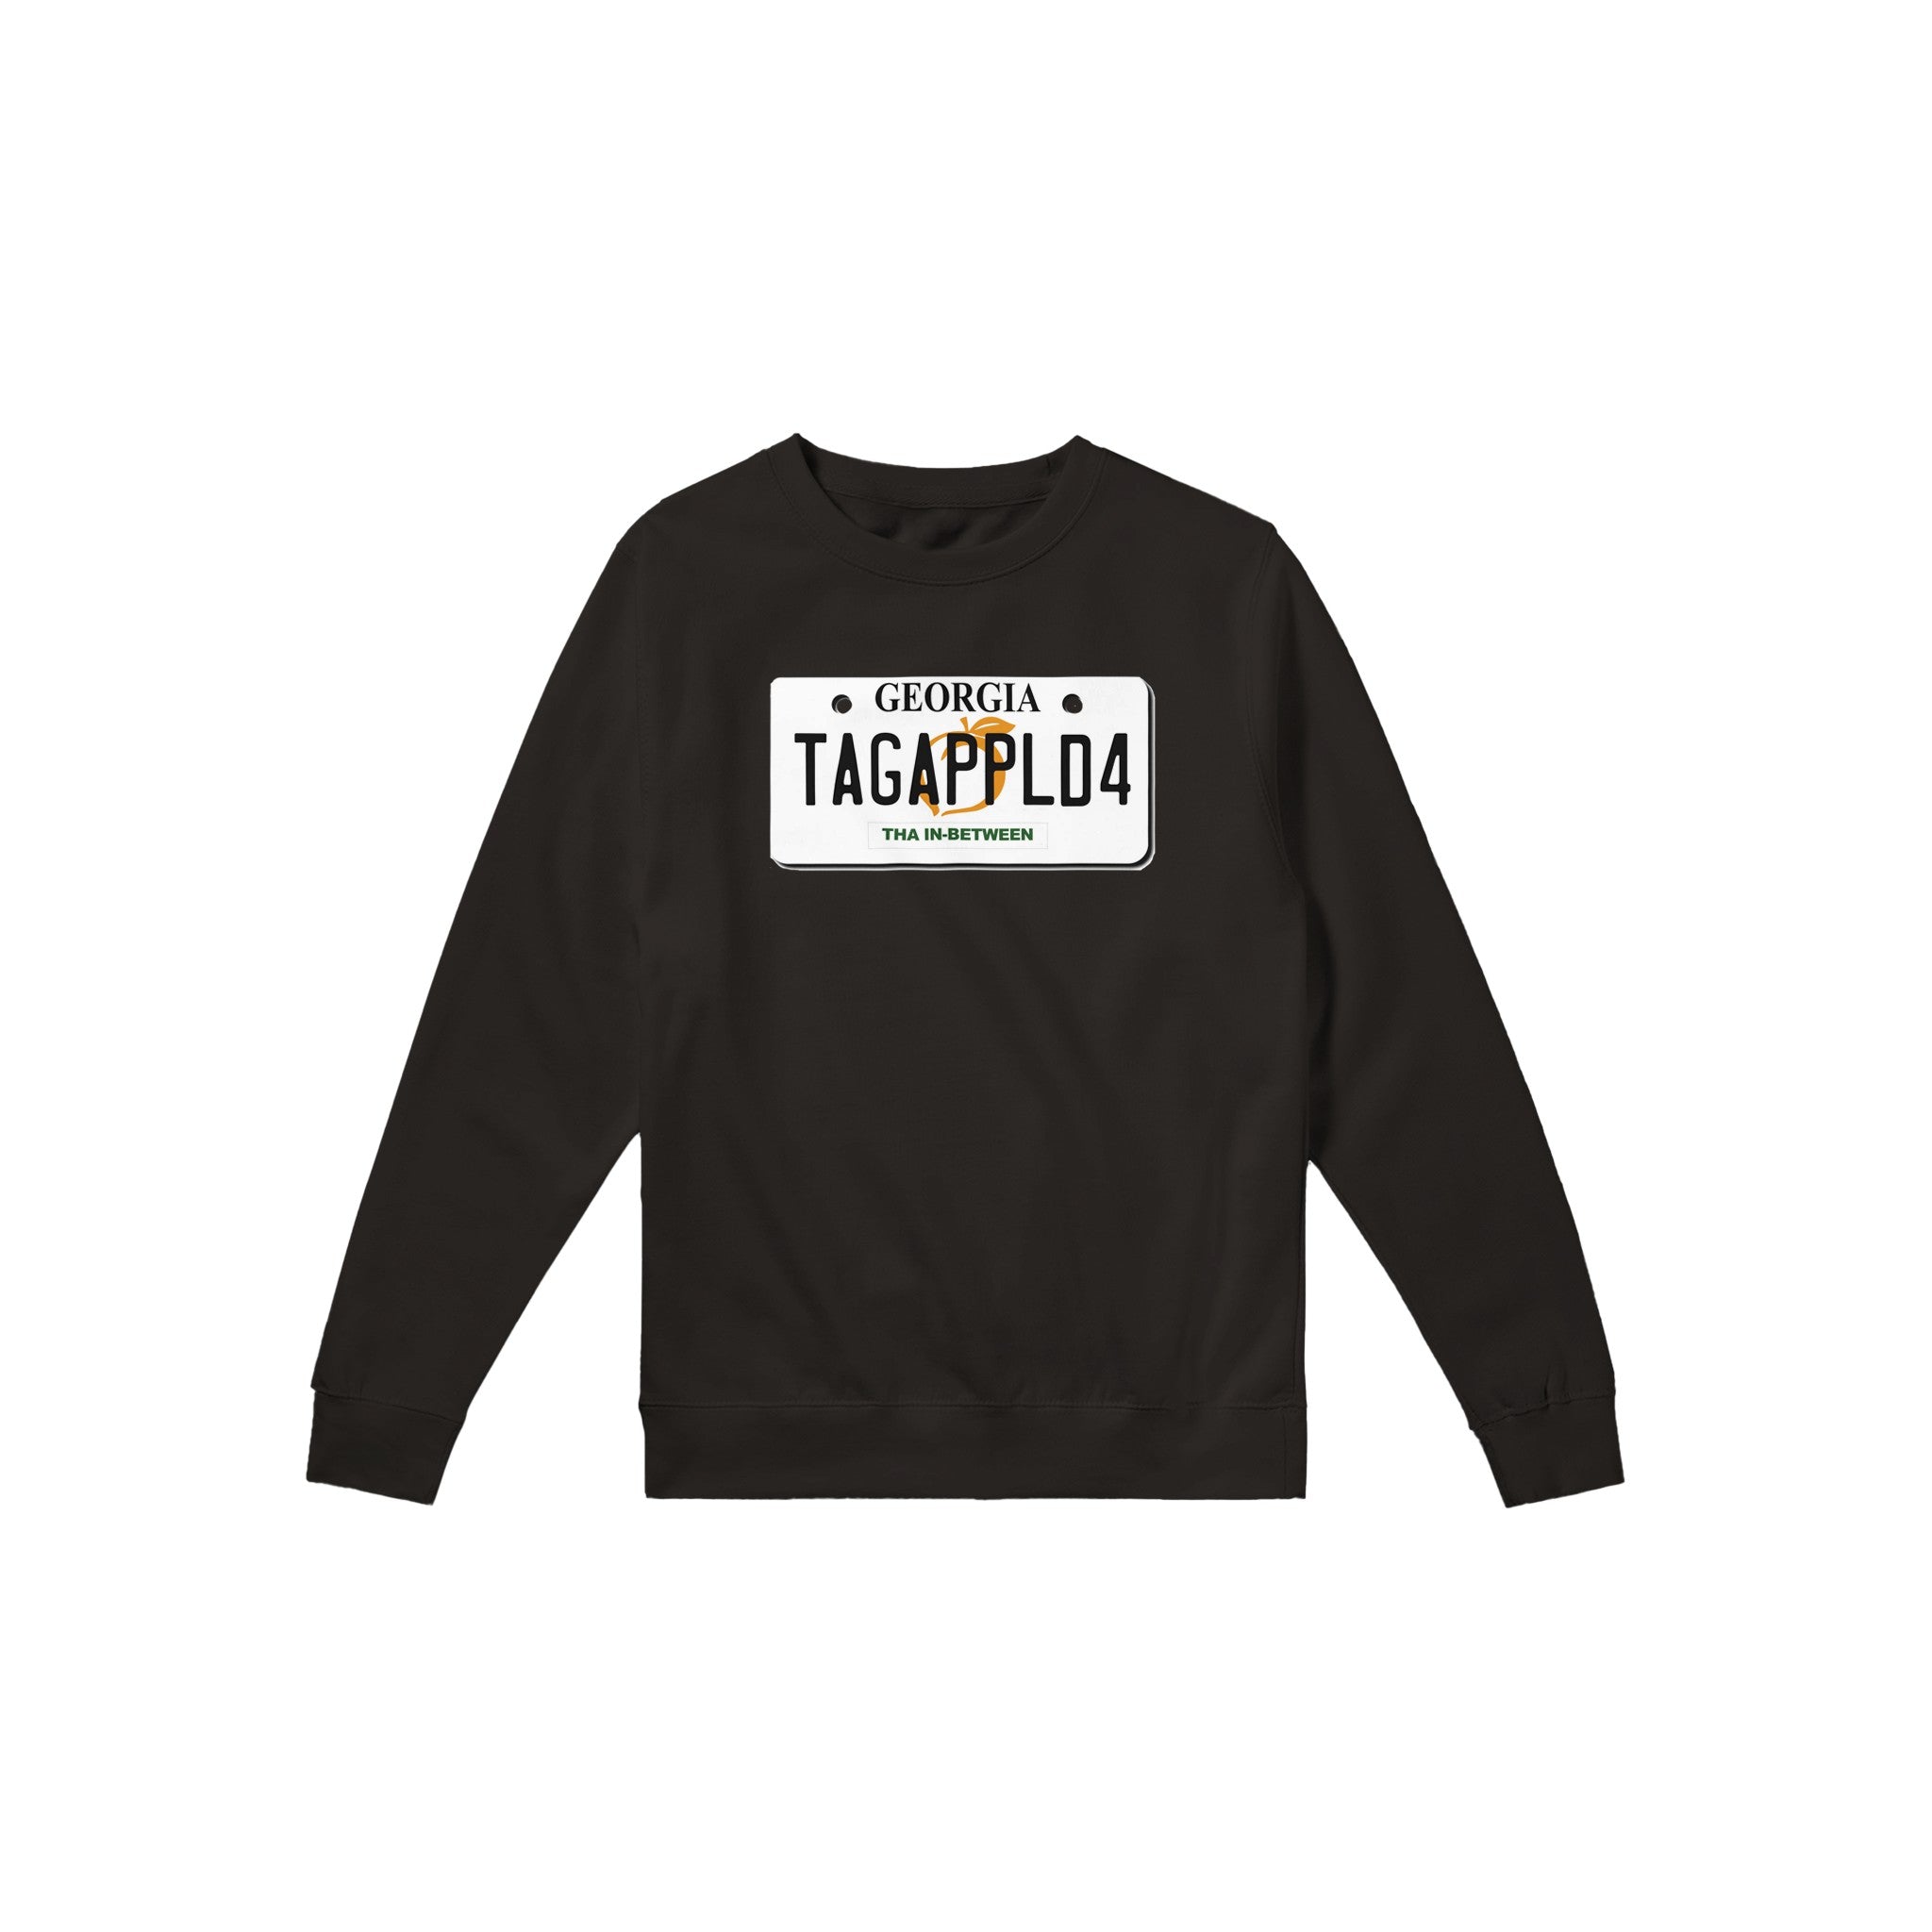 "Tag Applied For" - Premium Unisex Crewneck Sweatshirt